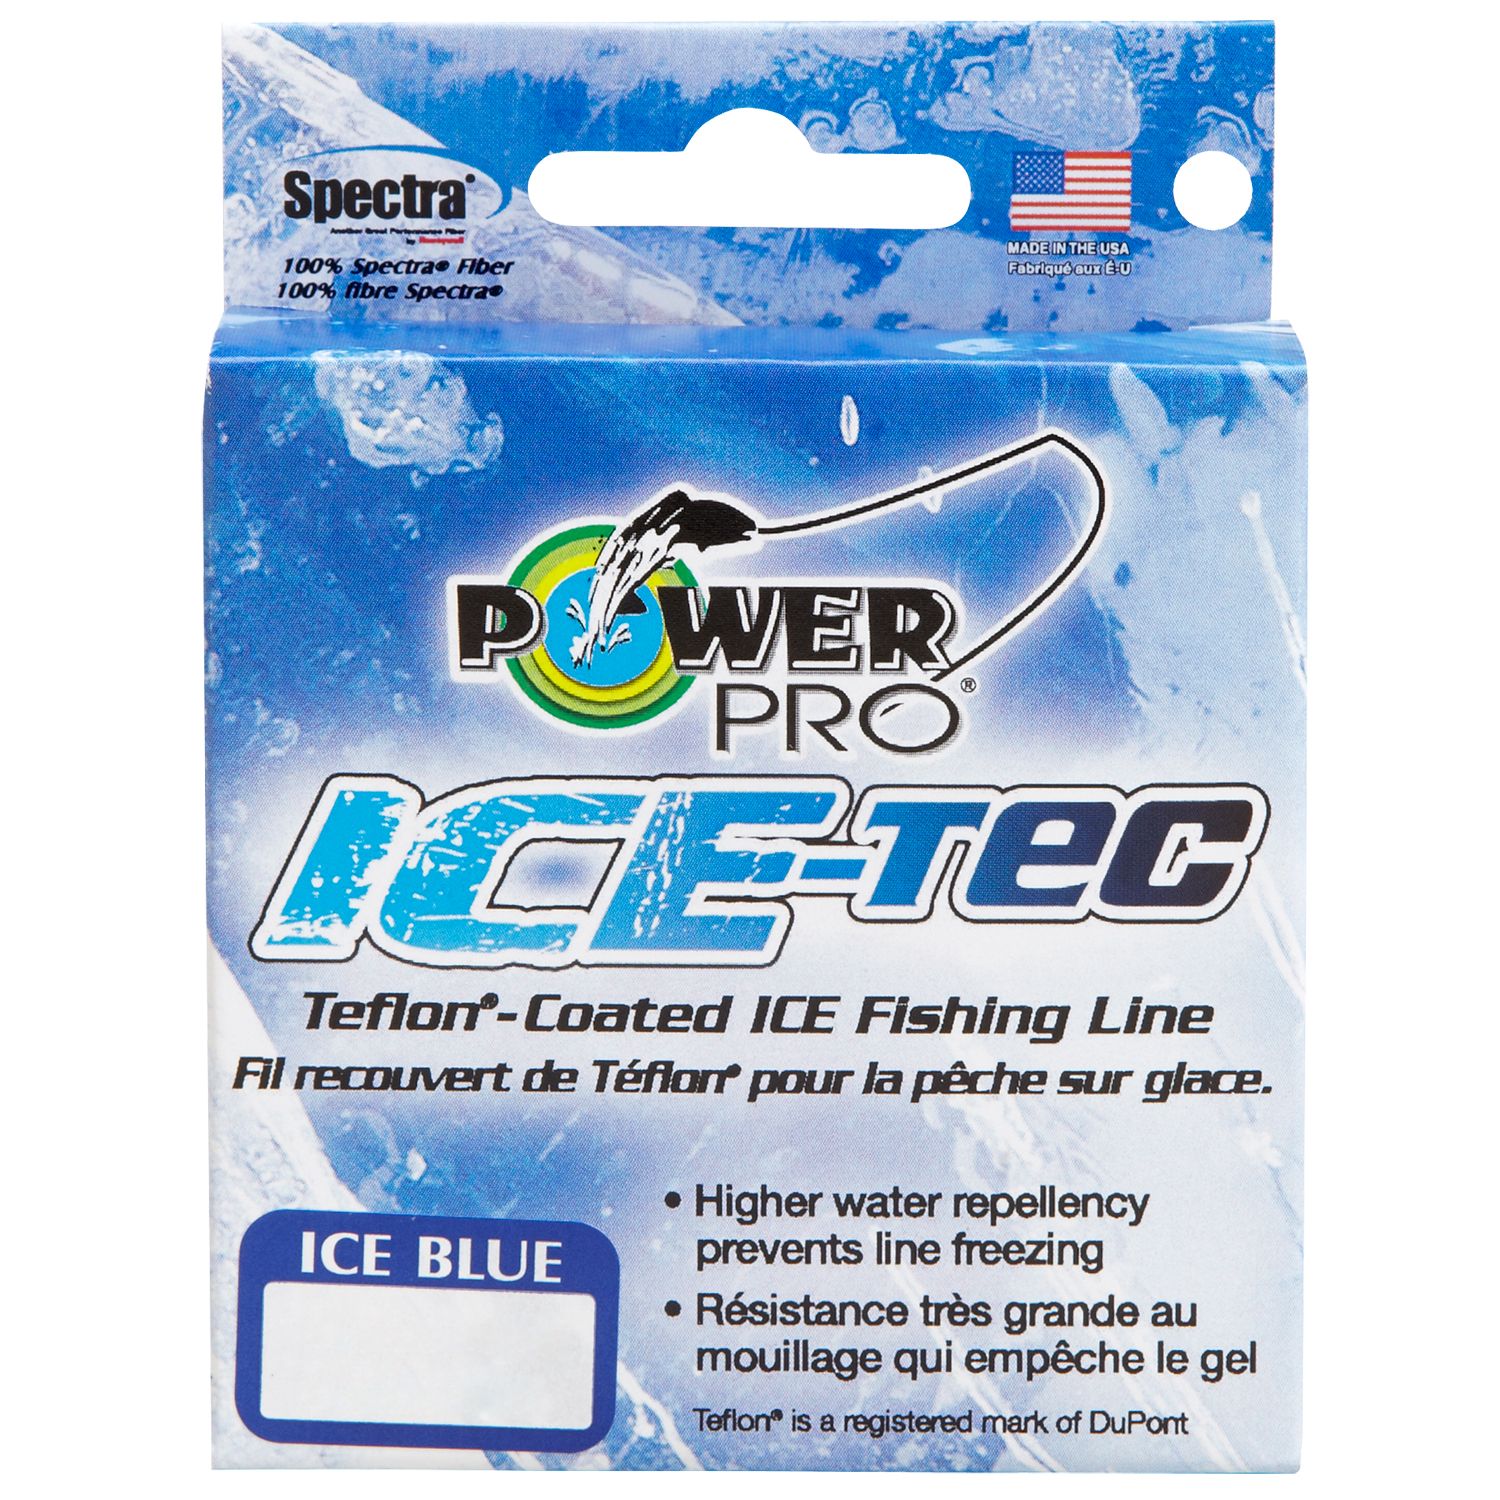 ice fishing line